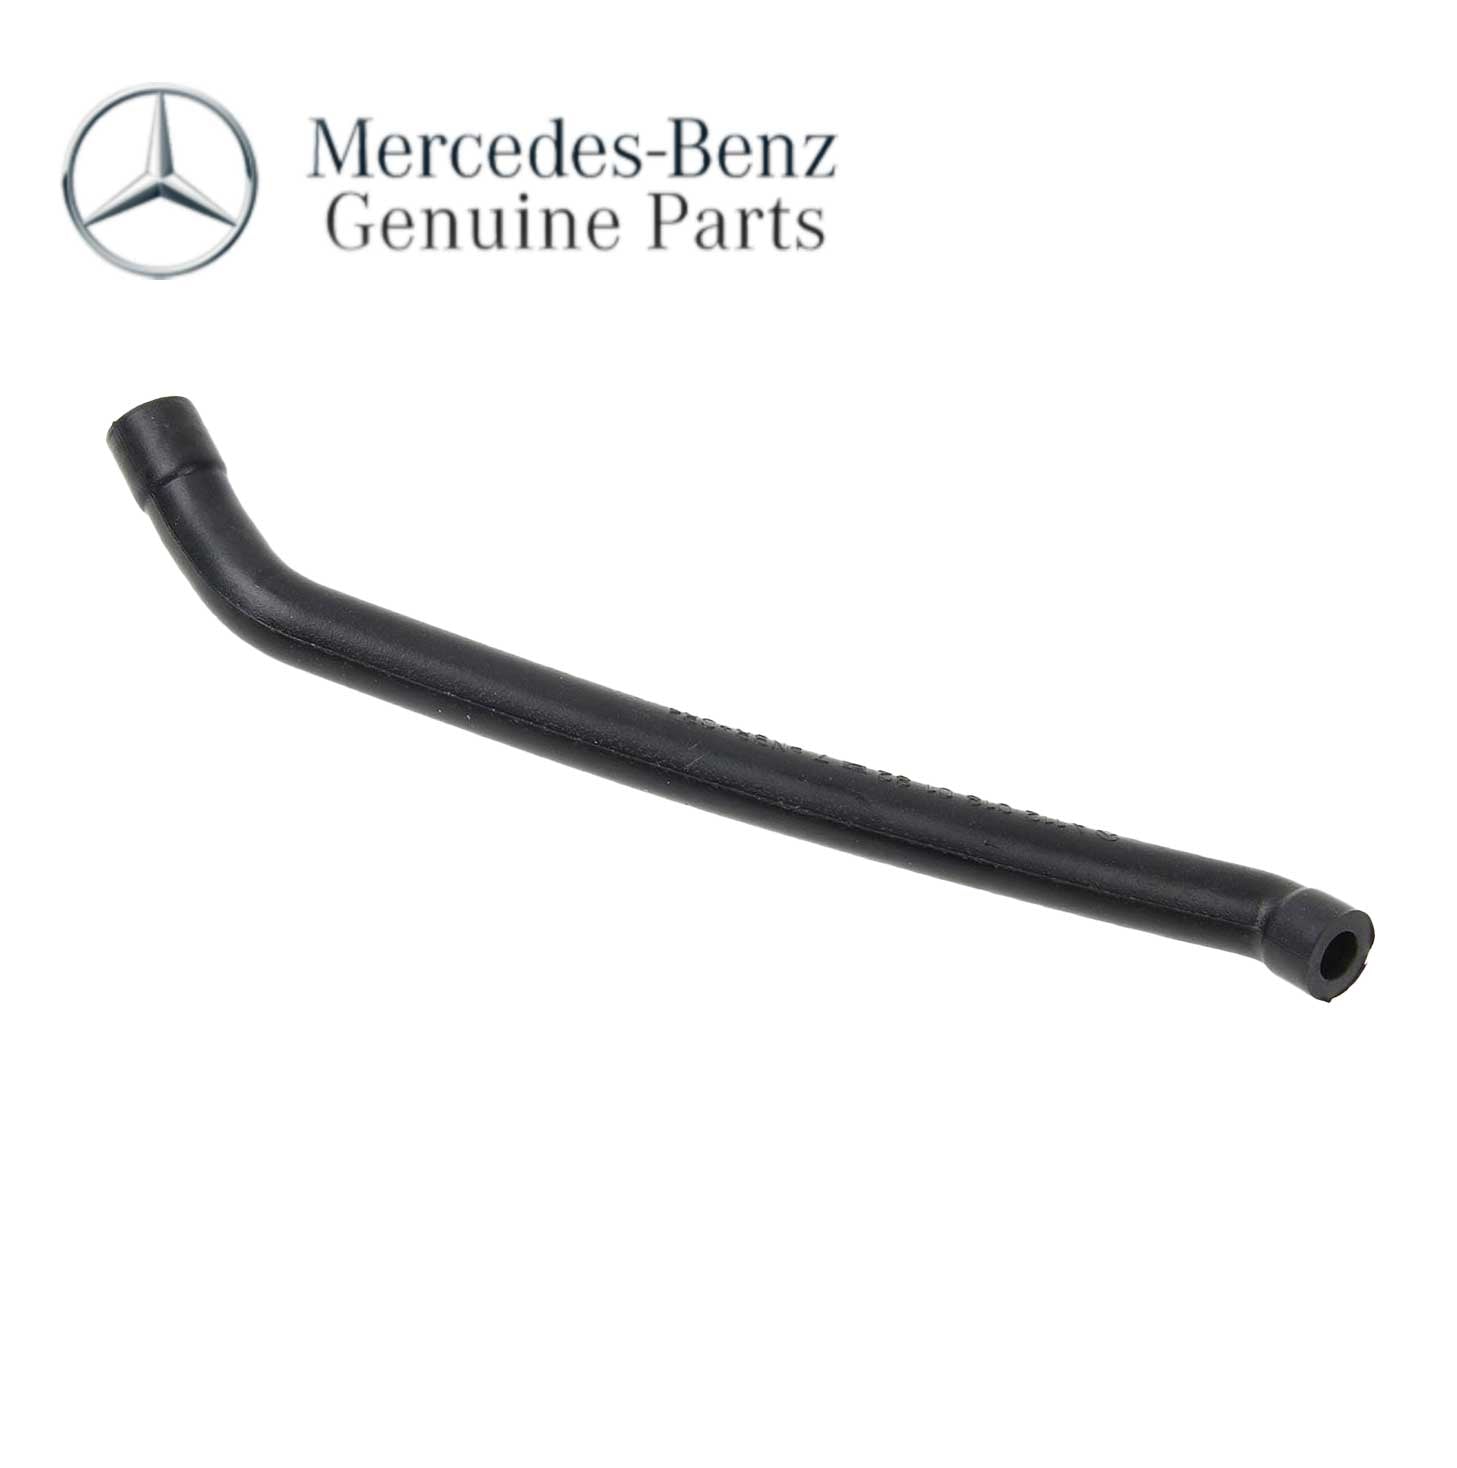 Mercedes Benz Genuine CRANKCASE BREATHER HOSE (Original Parts Without Sticker Level and Neutral Box) C240 C280 C320 C43 AMG C55 AMG CL500 1120180182